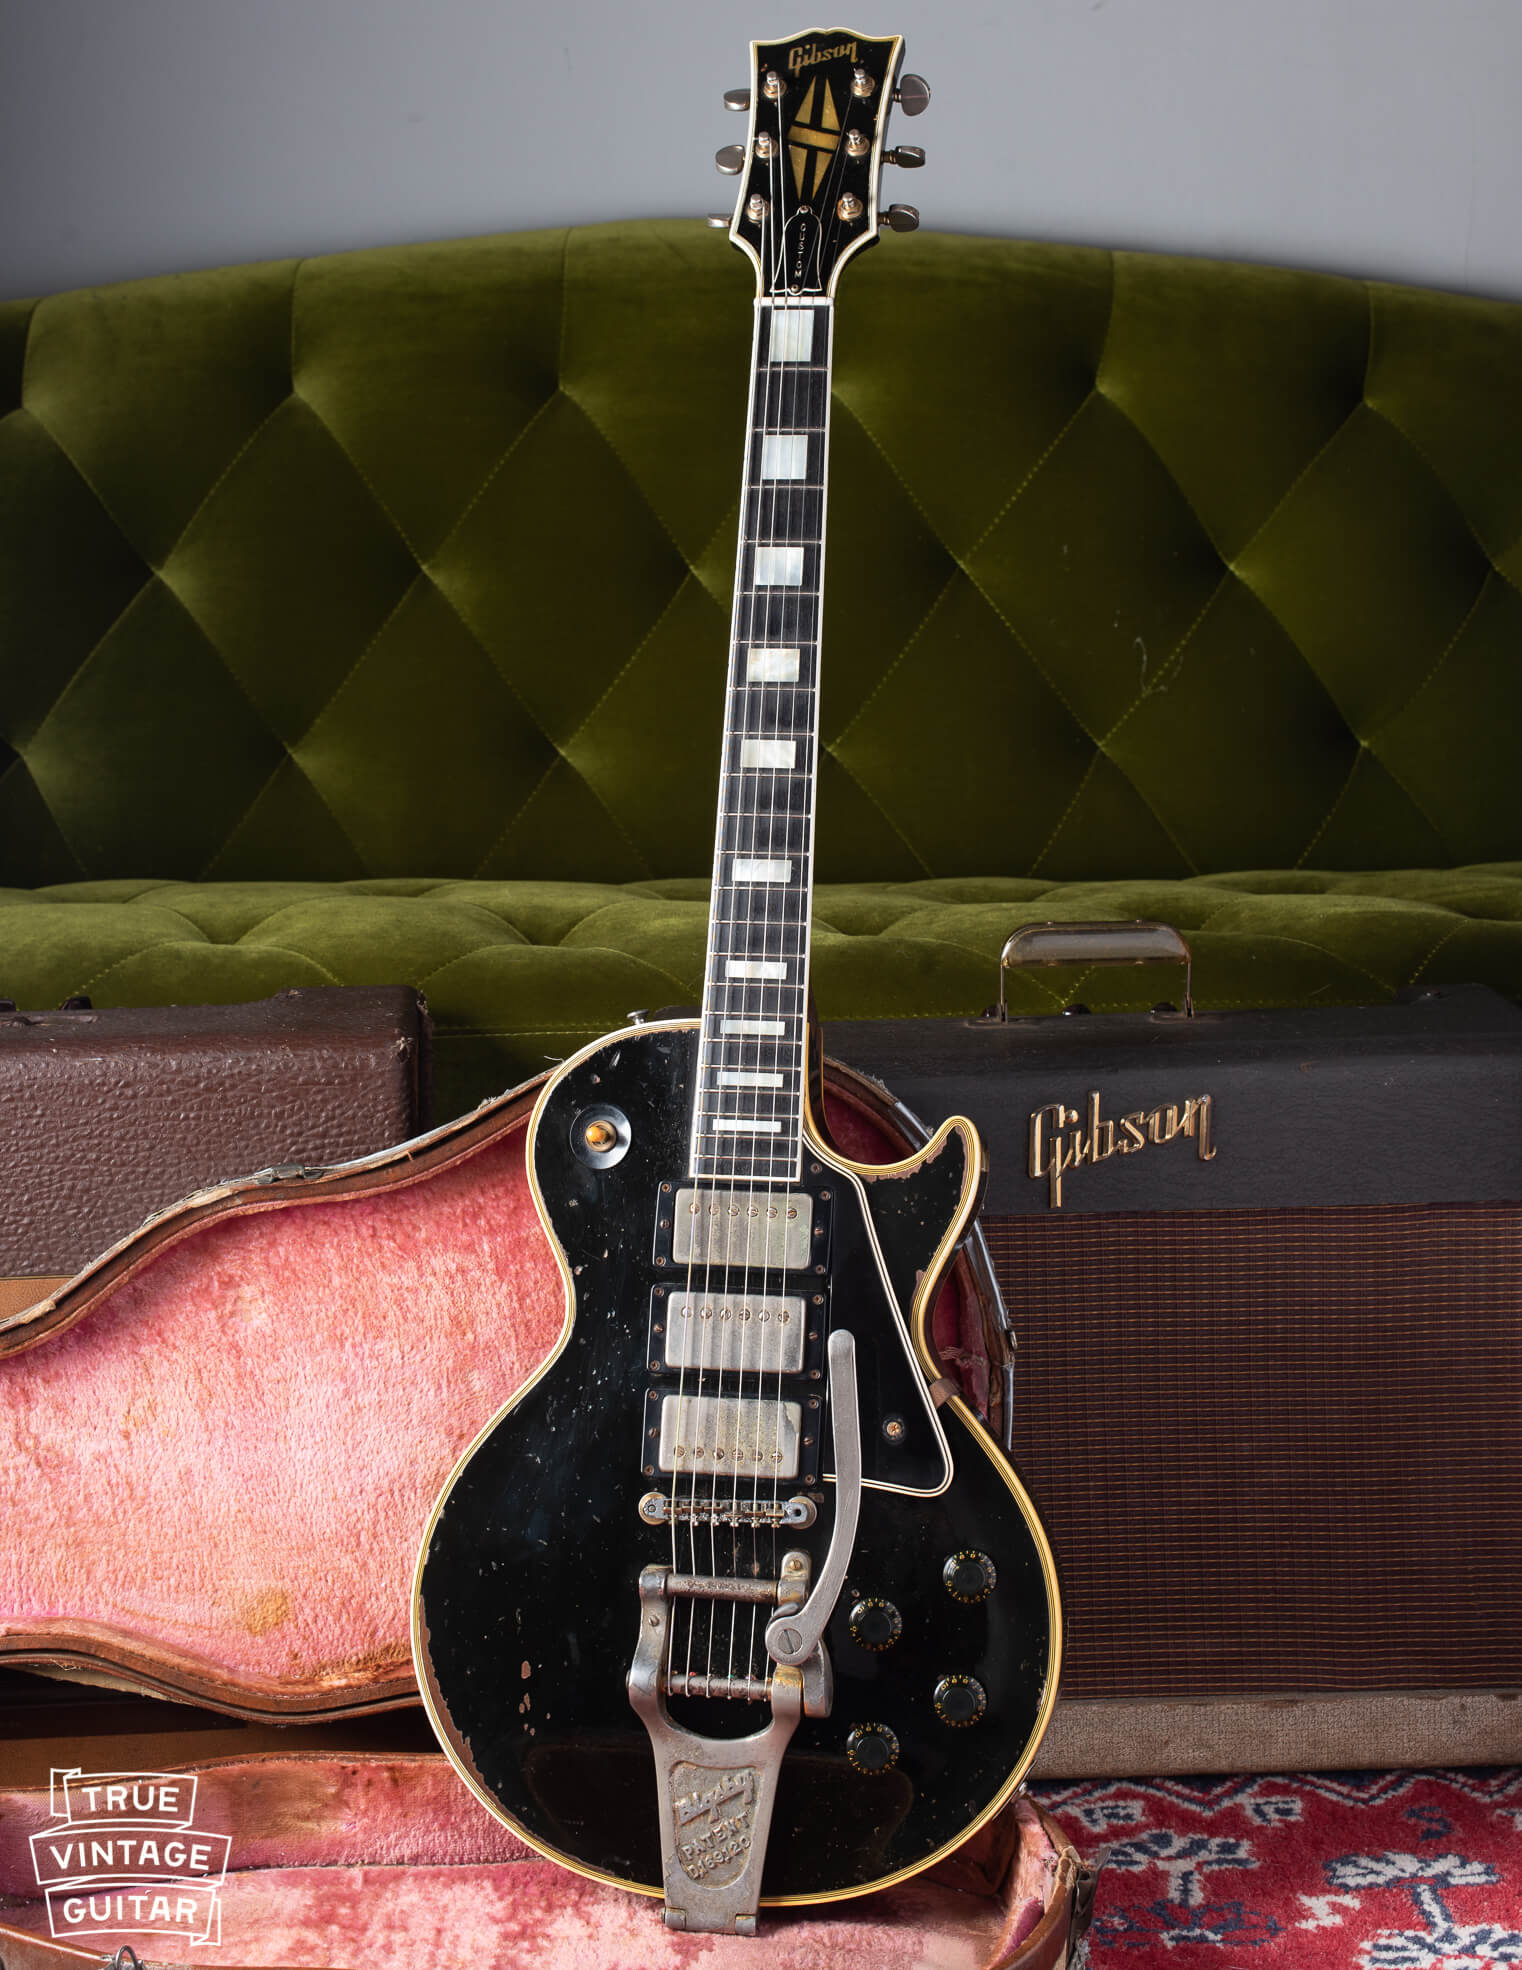 1960 Gibson Les Paul Custom black guitar with gold pickups